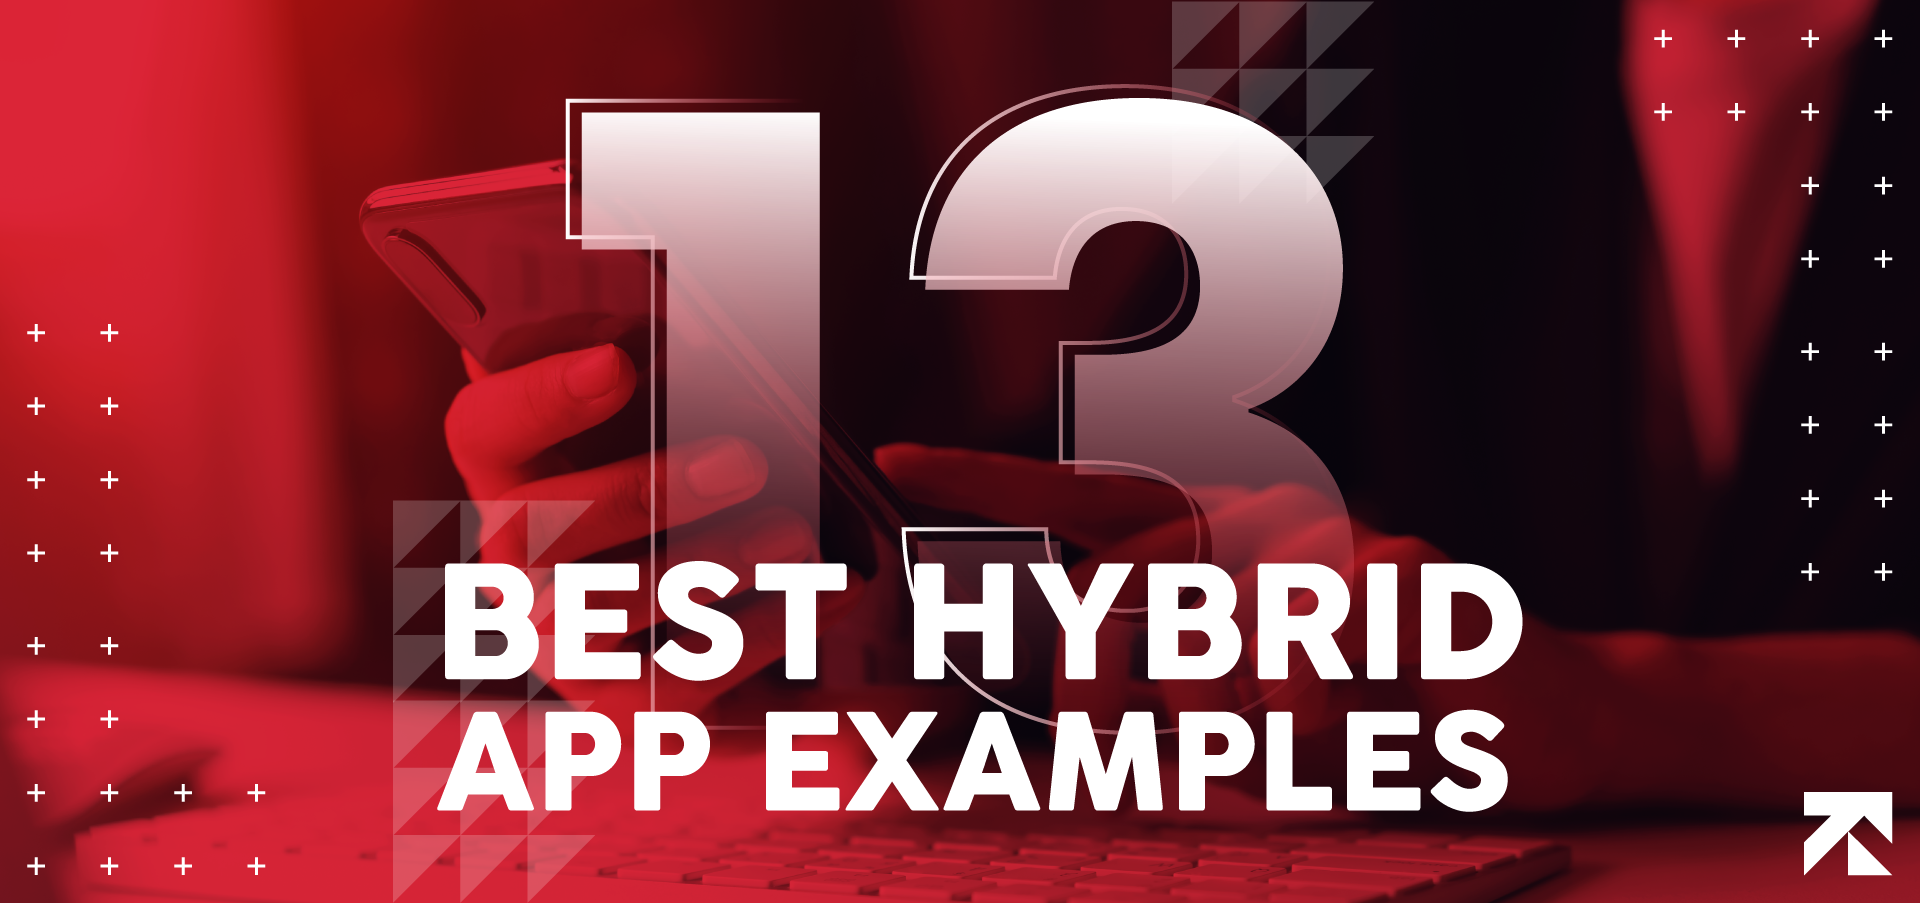 13 best hybrid app examples